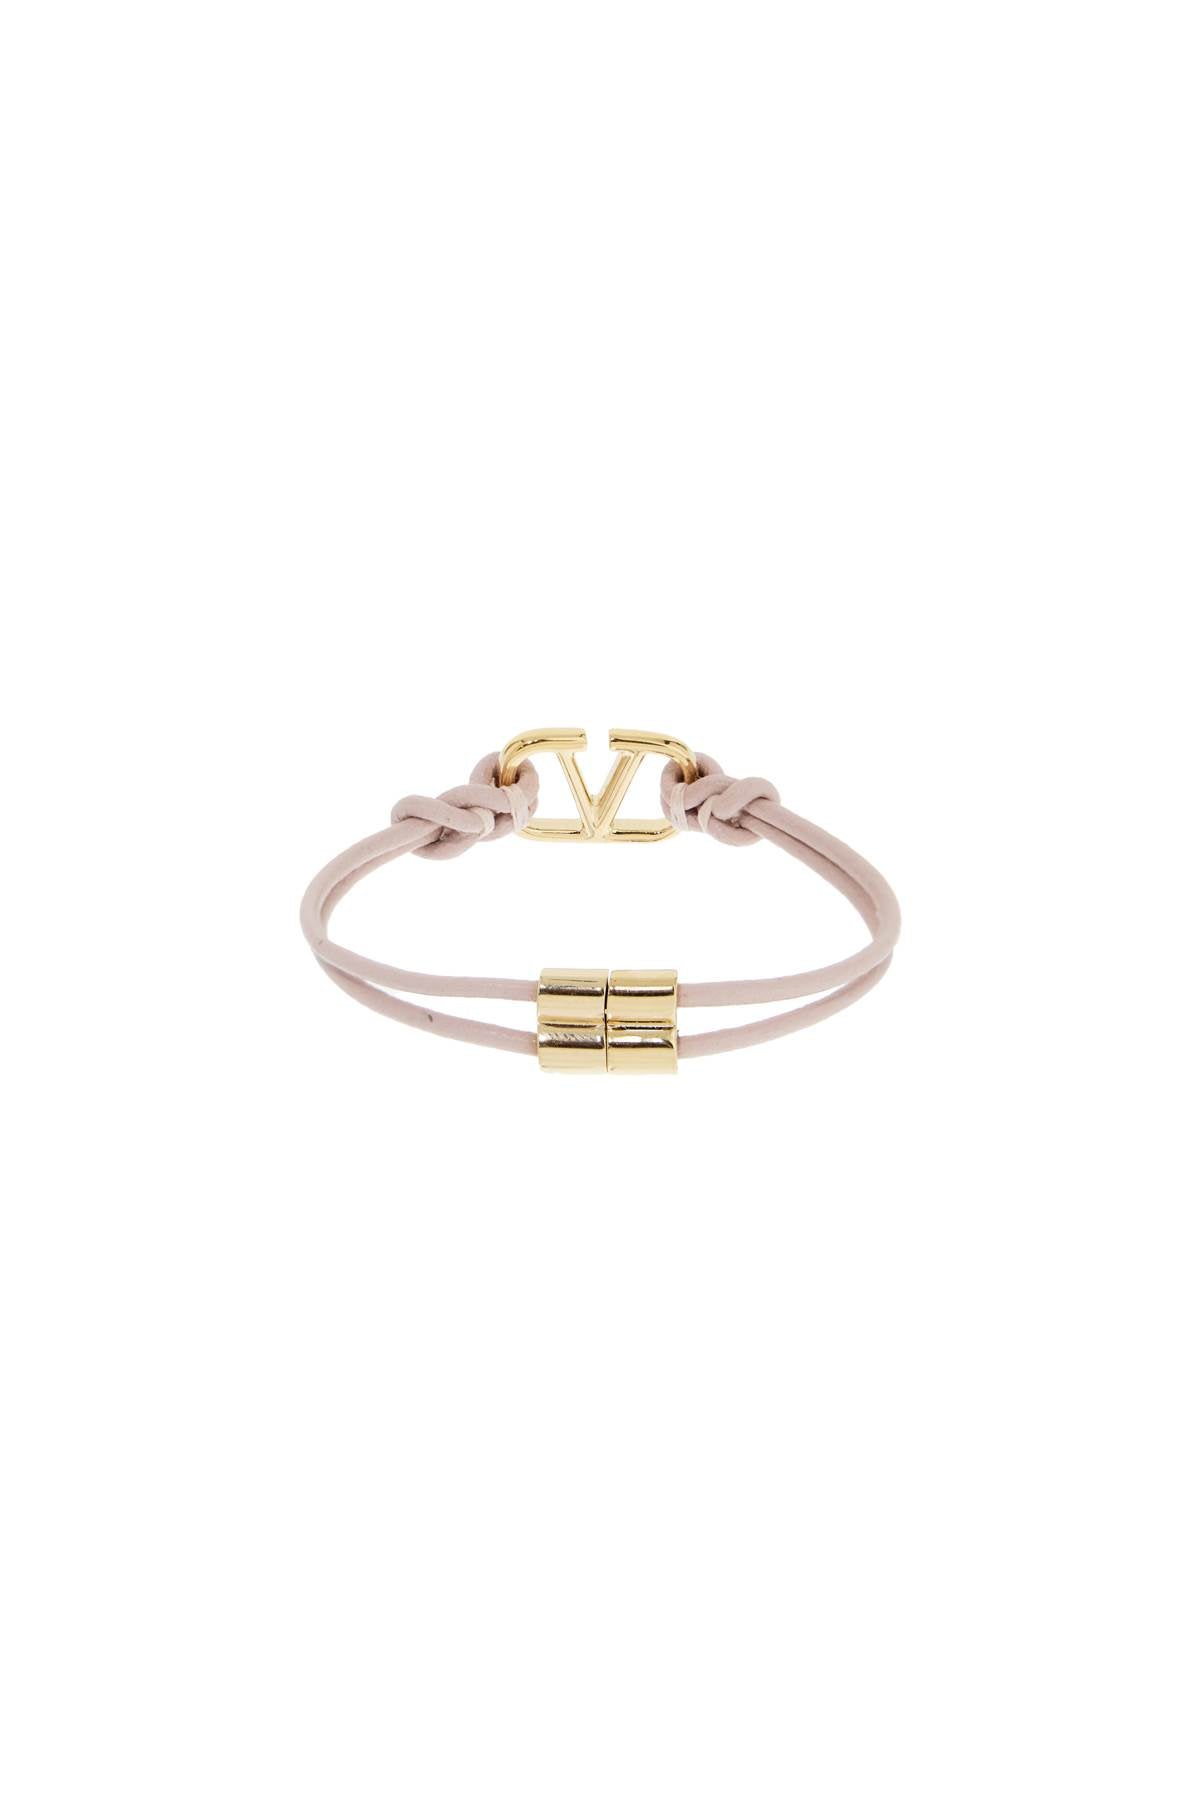 Valentino GARAVANI leather vlogo signature bracelet - Gold